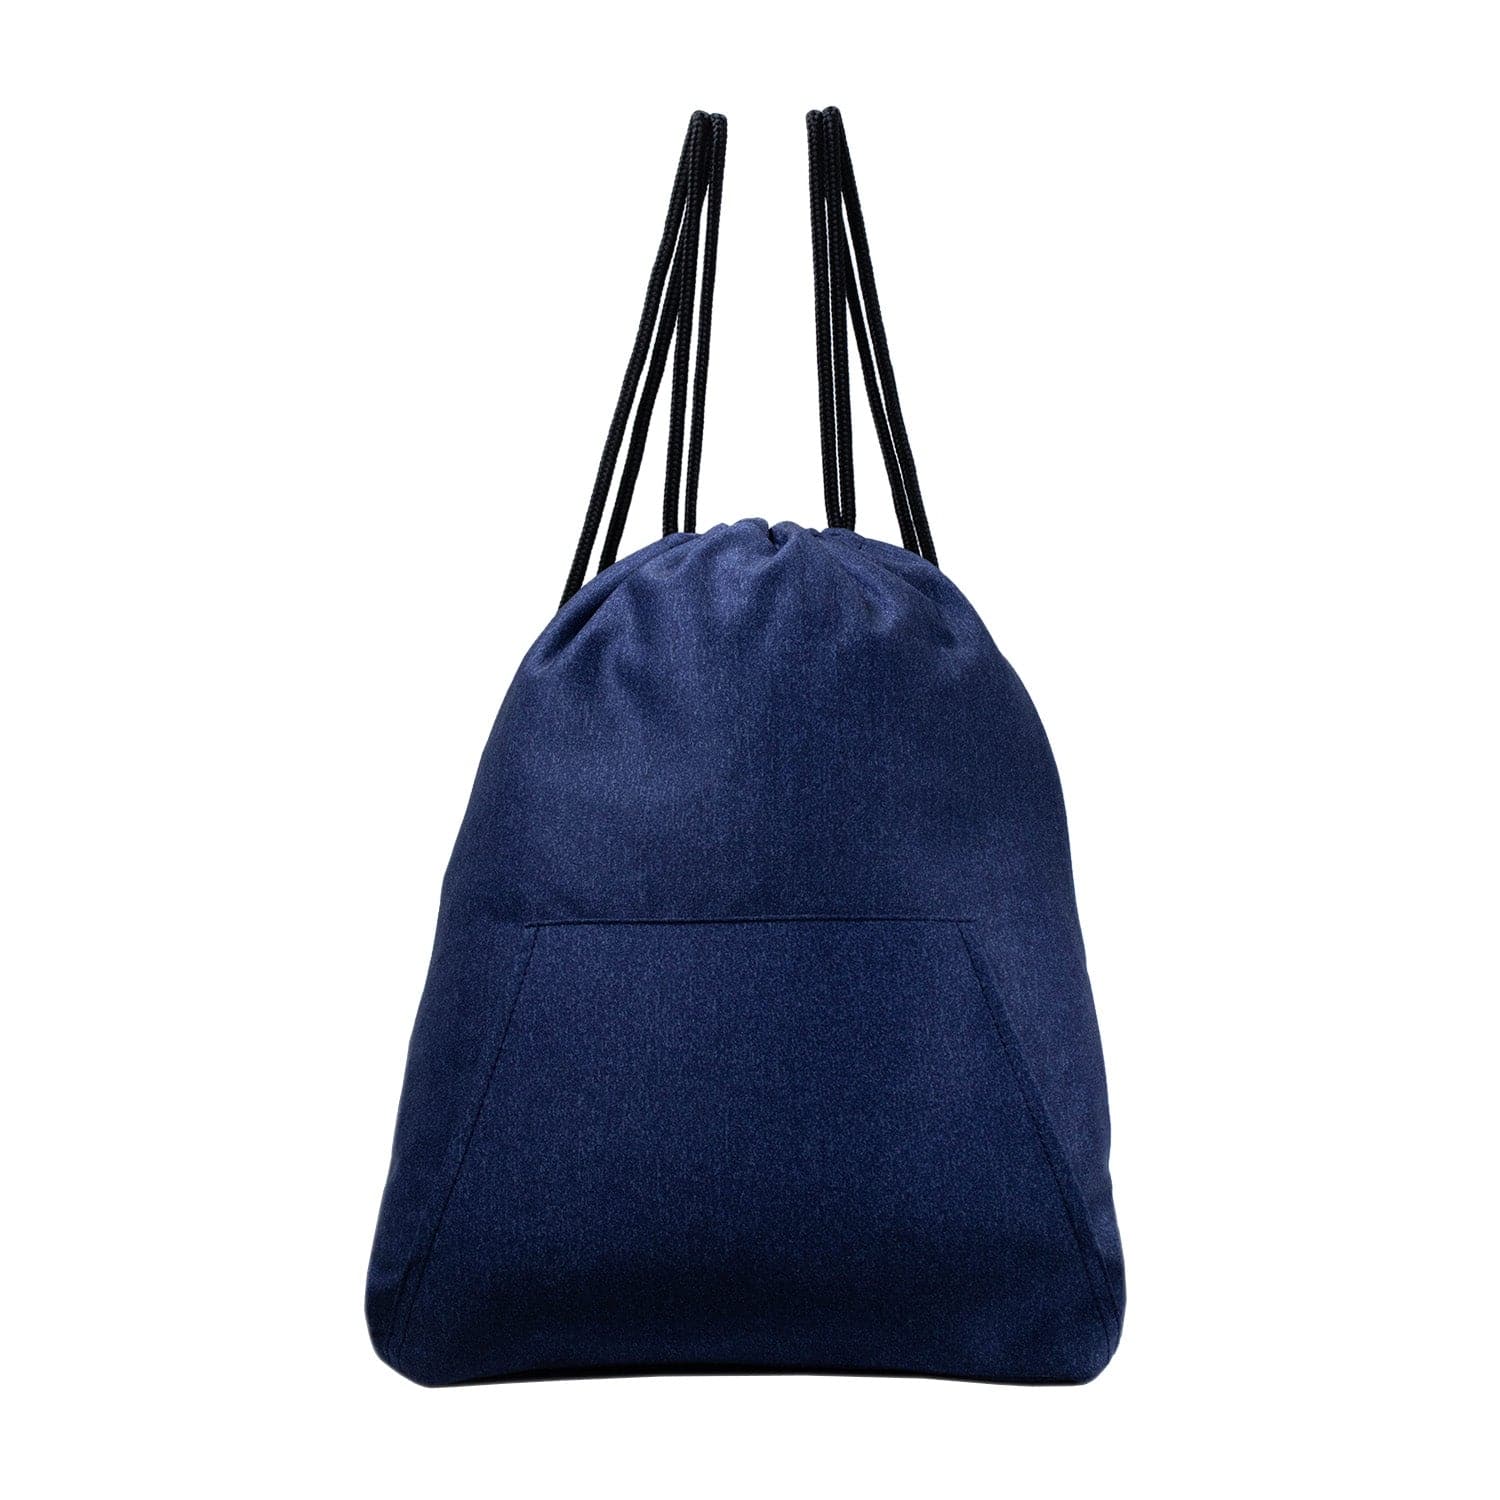 Moda Handbag - Moda Handbag - Wholesalers of Handbags and Accessories